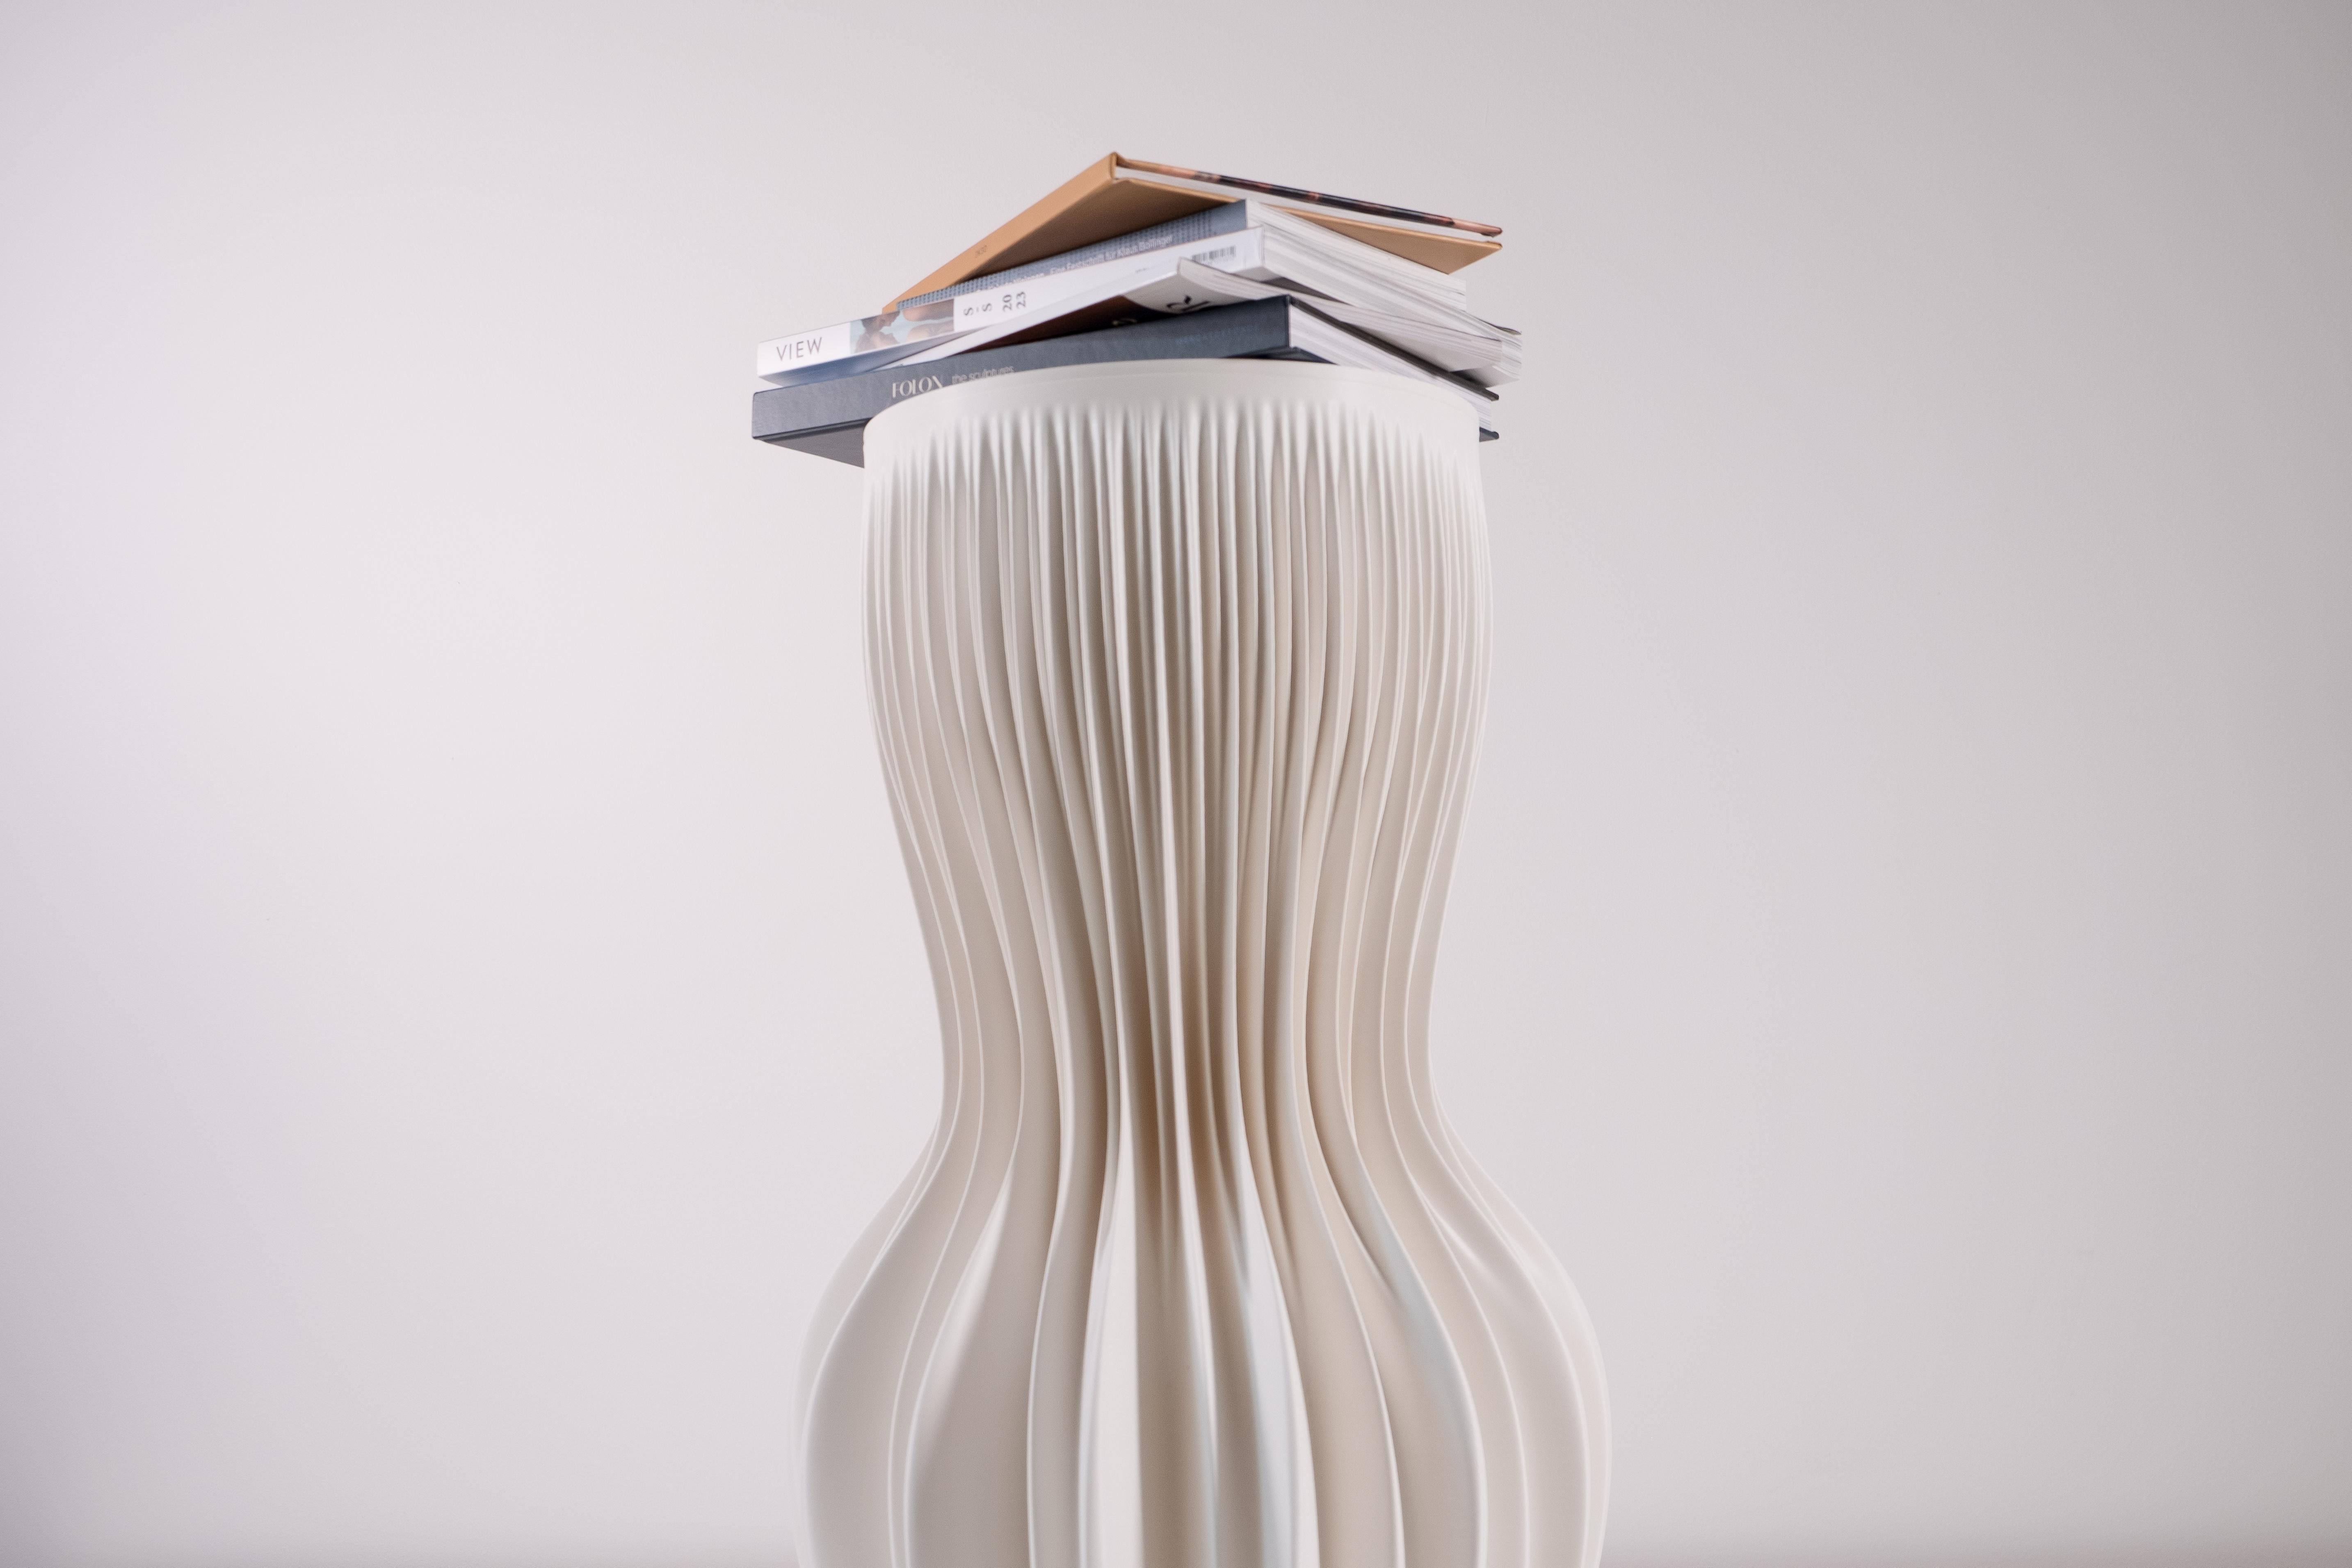  JK3D Lamella Pedestal Medium, 3d Printed Design by Julia Koerner  In New Condition For Sale In Playa Del Rey, CA